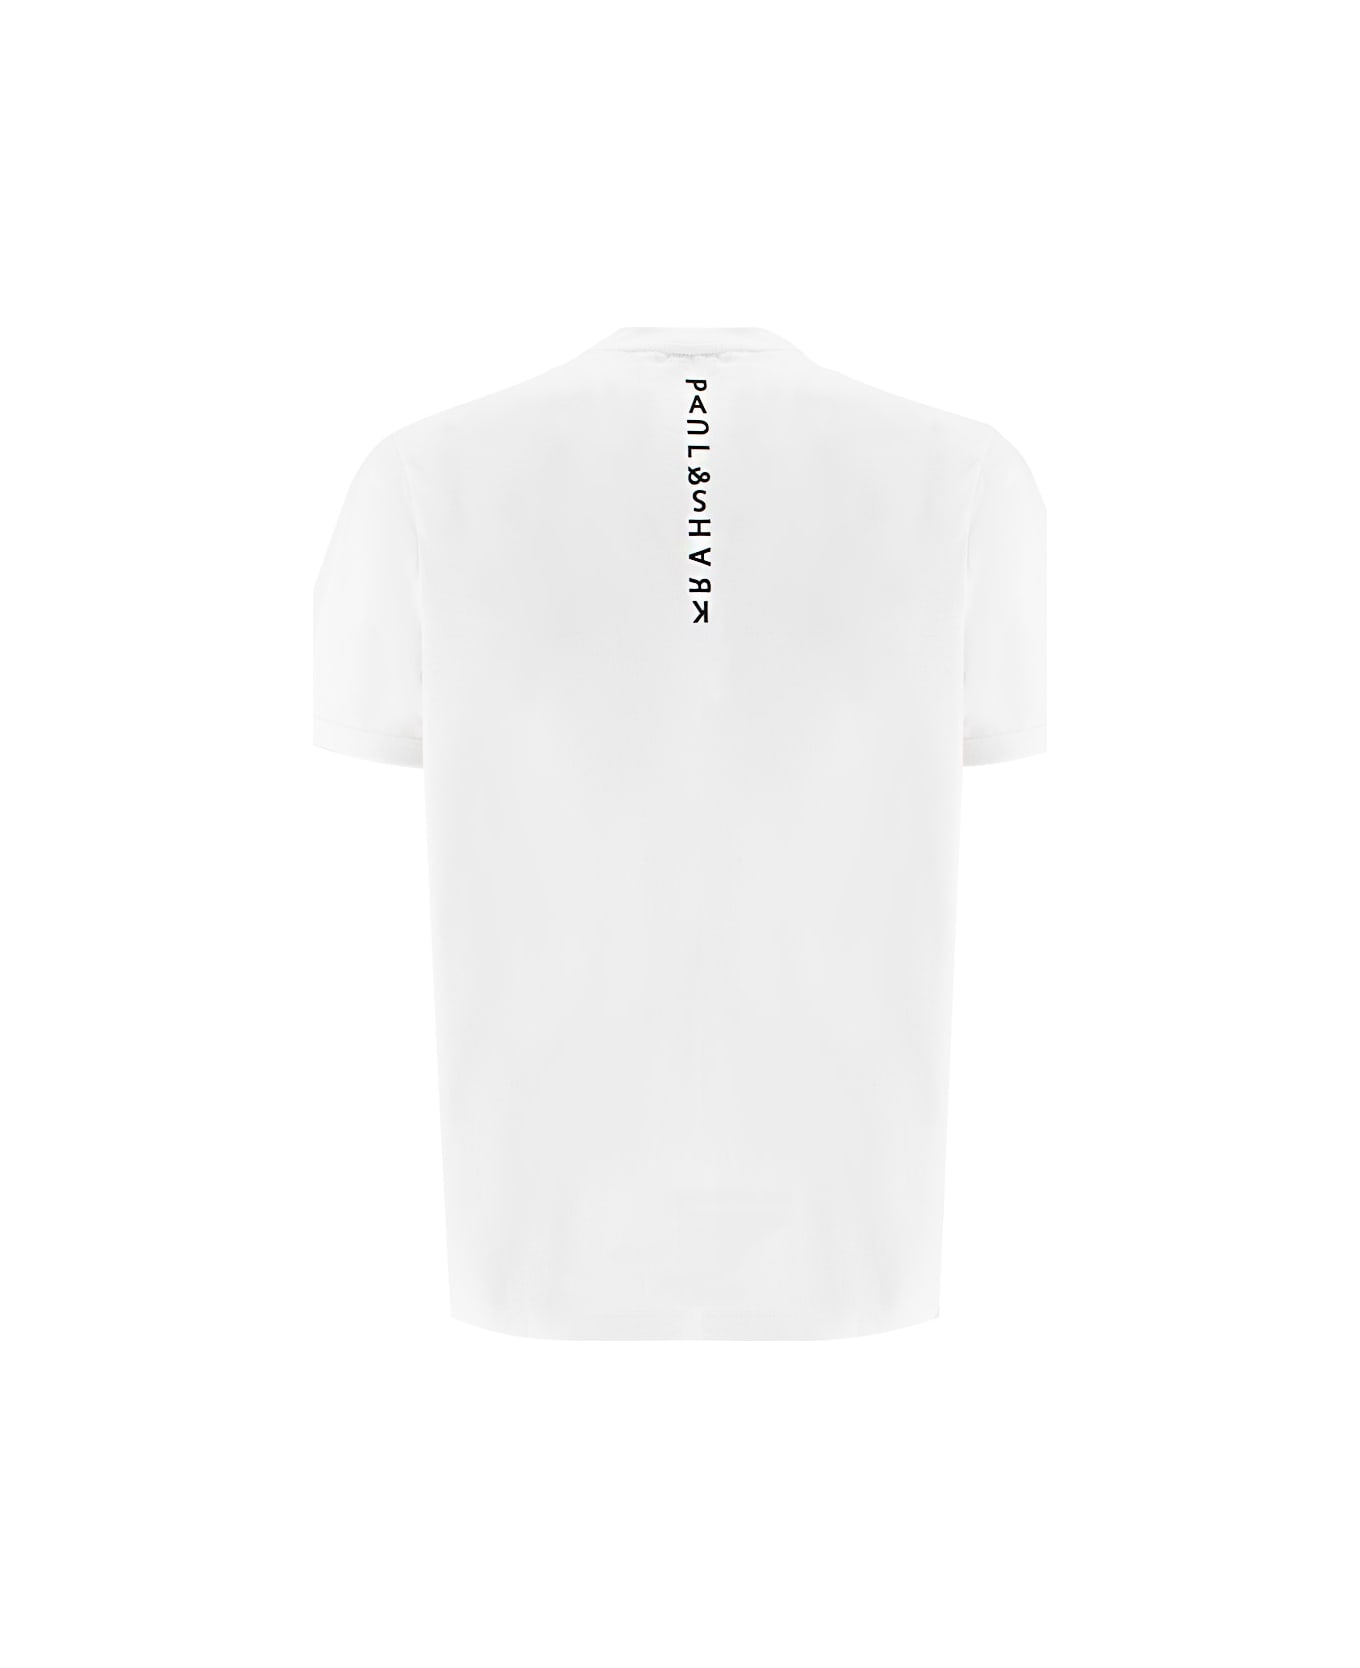 Paul&Shark T-shirt - BIANCO シャツ